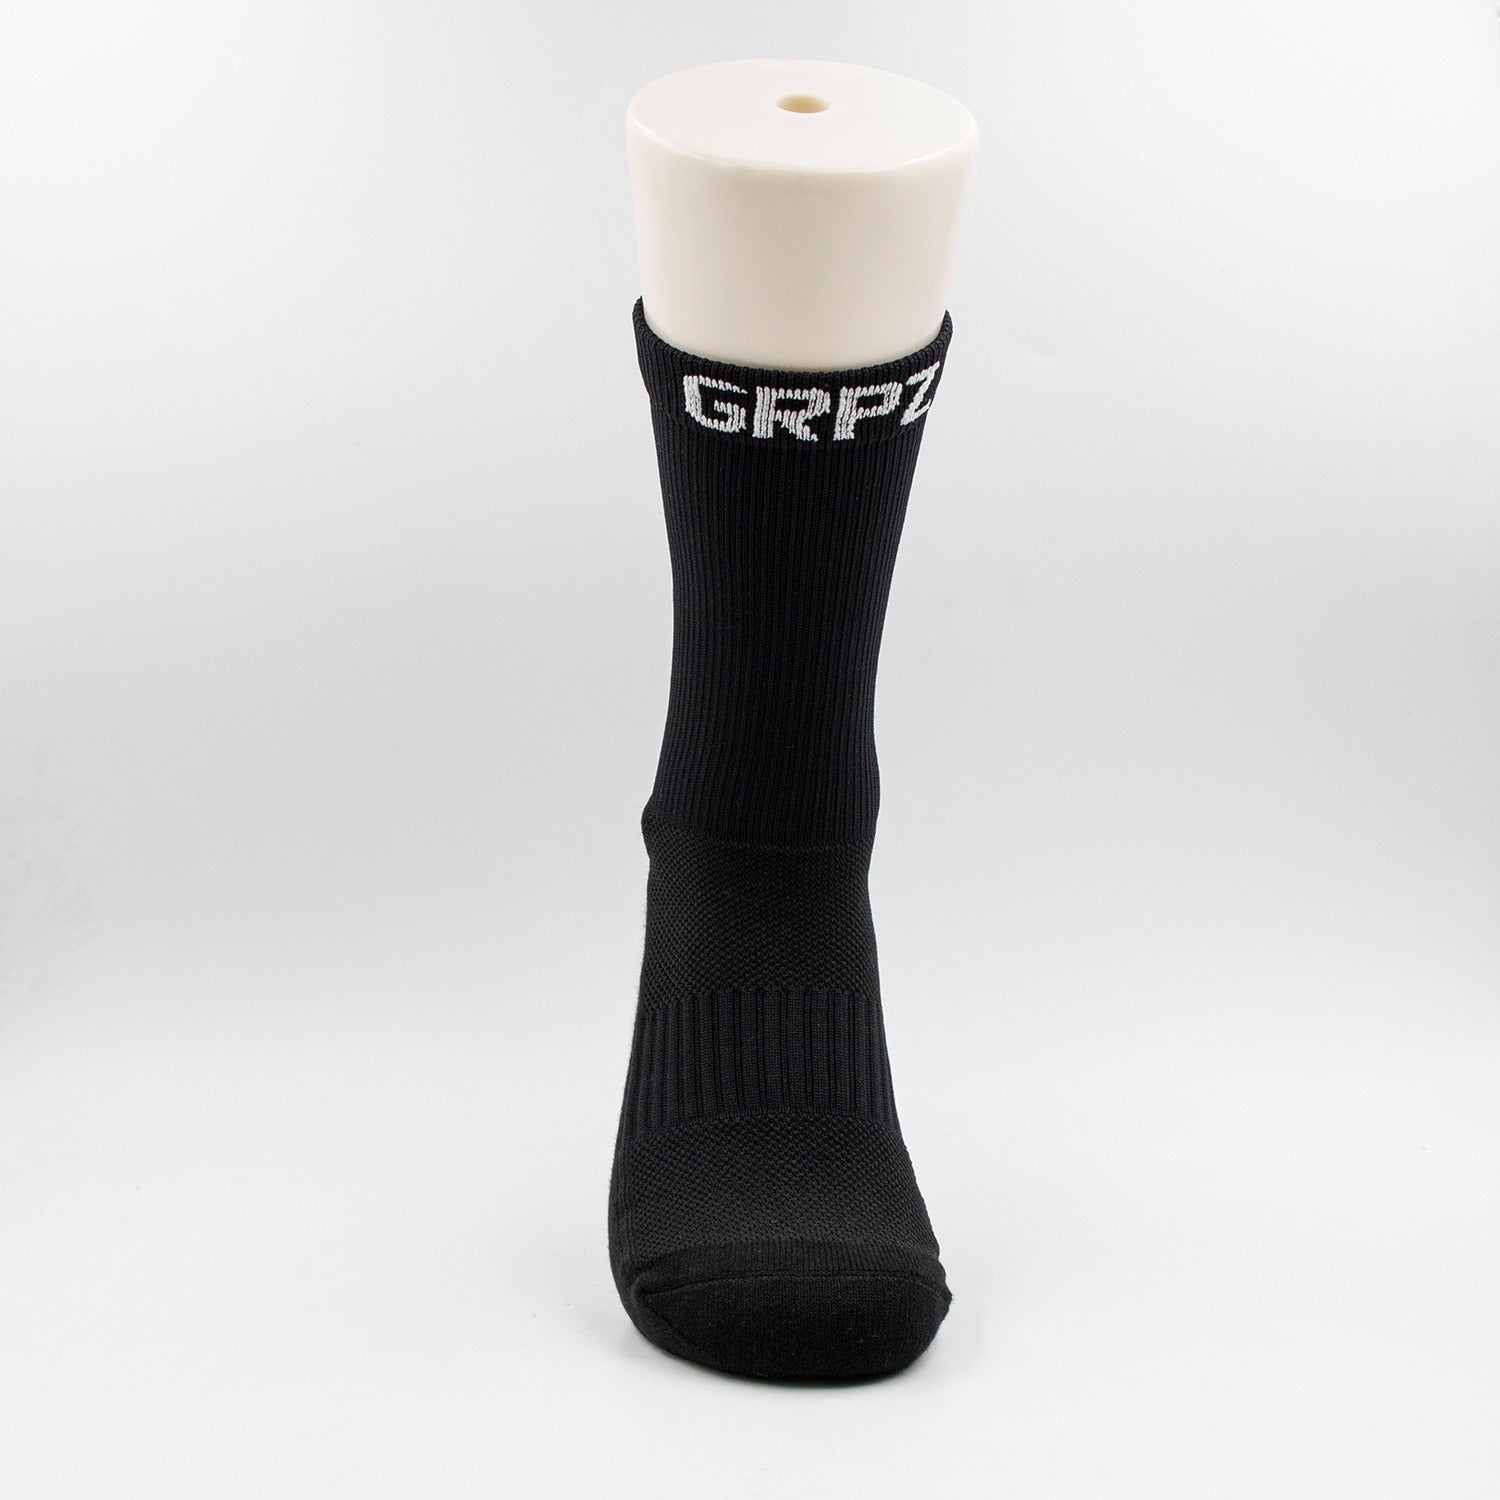 Black Grip Socks by GRPZ Sports Front View